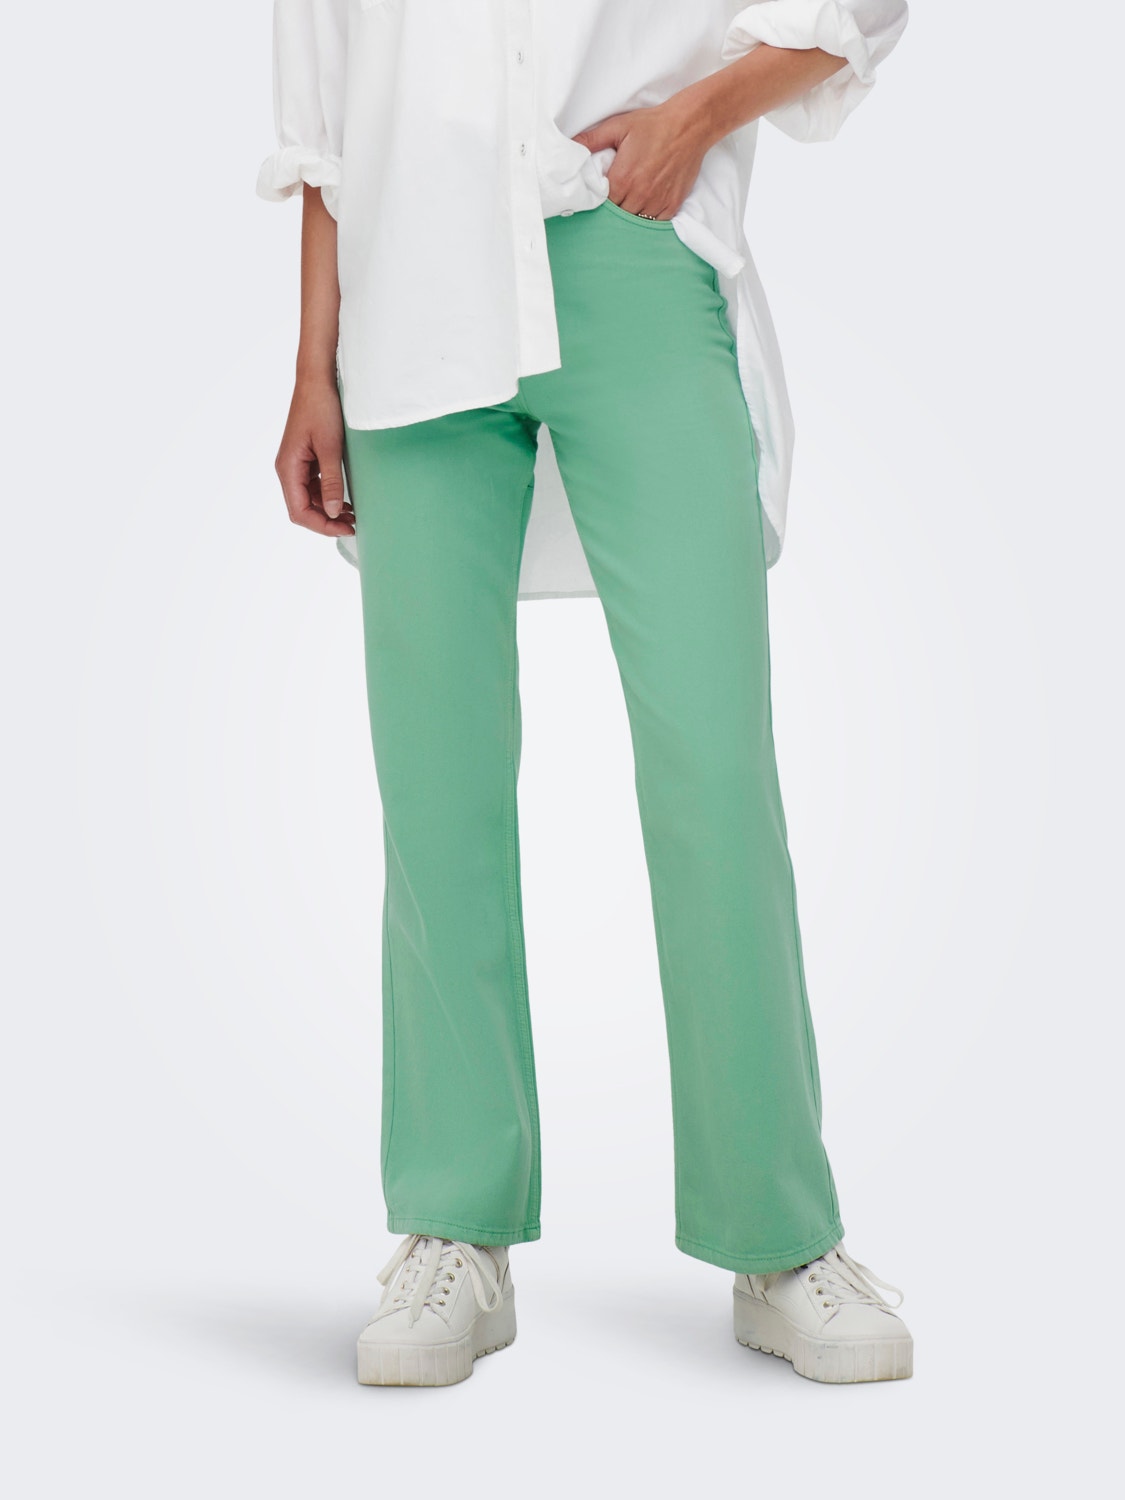 Wide fit mintgreen pants